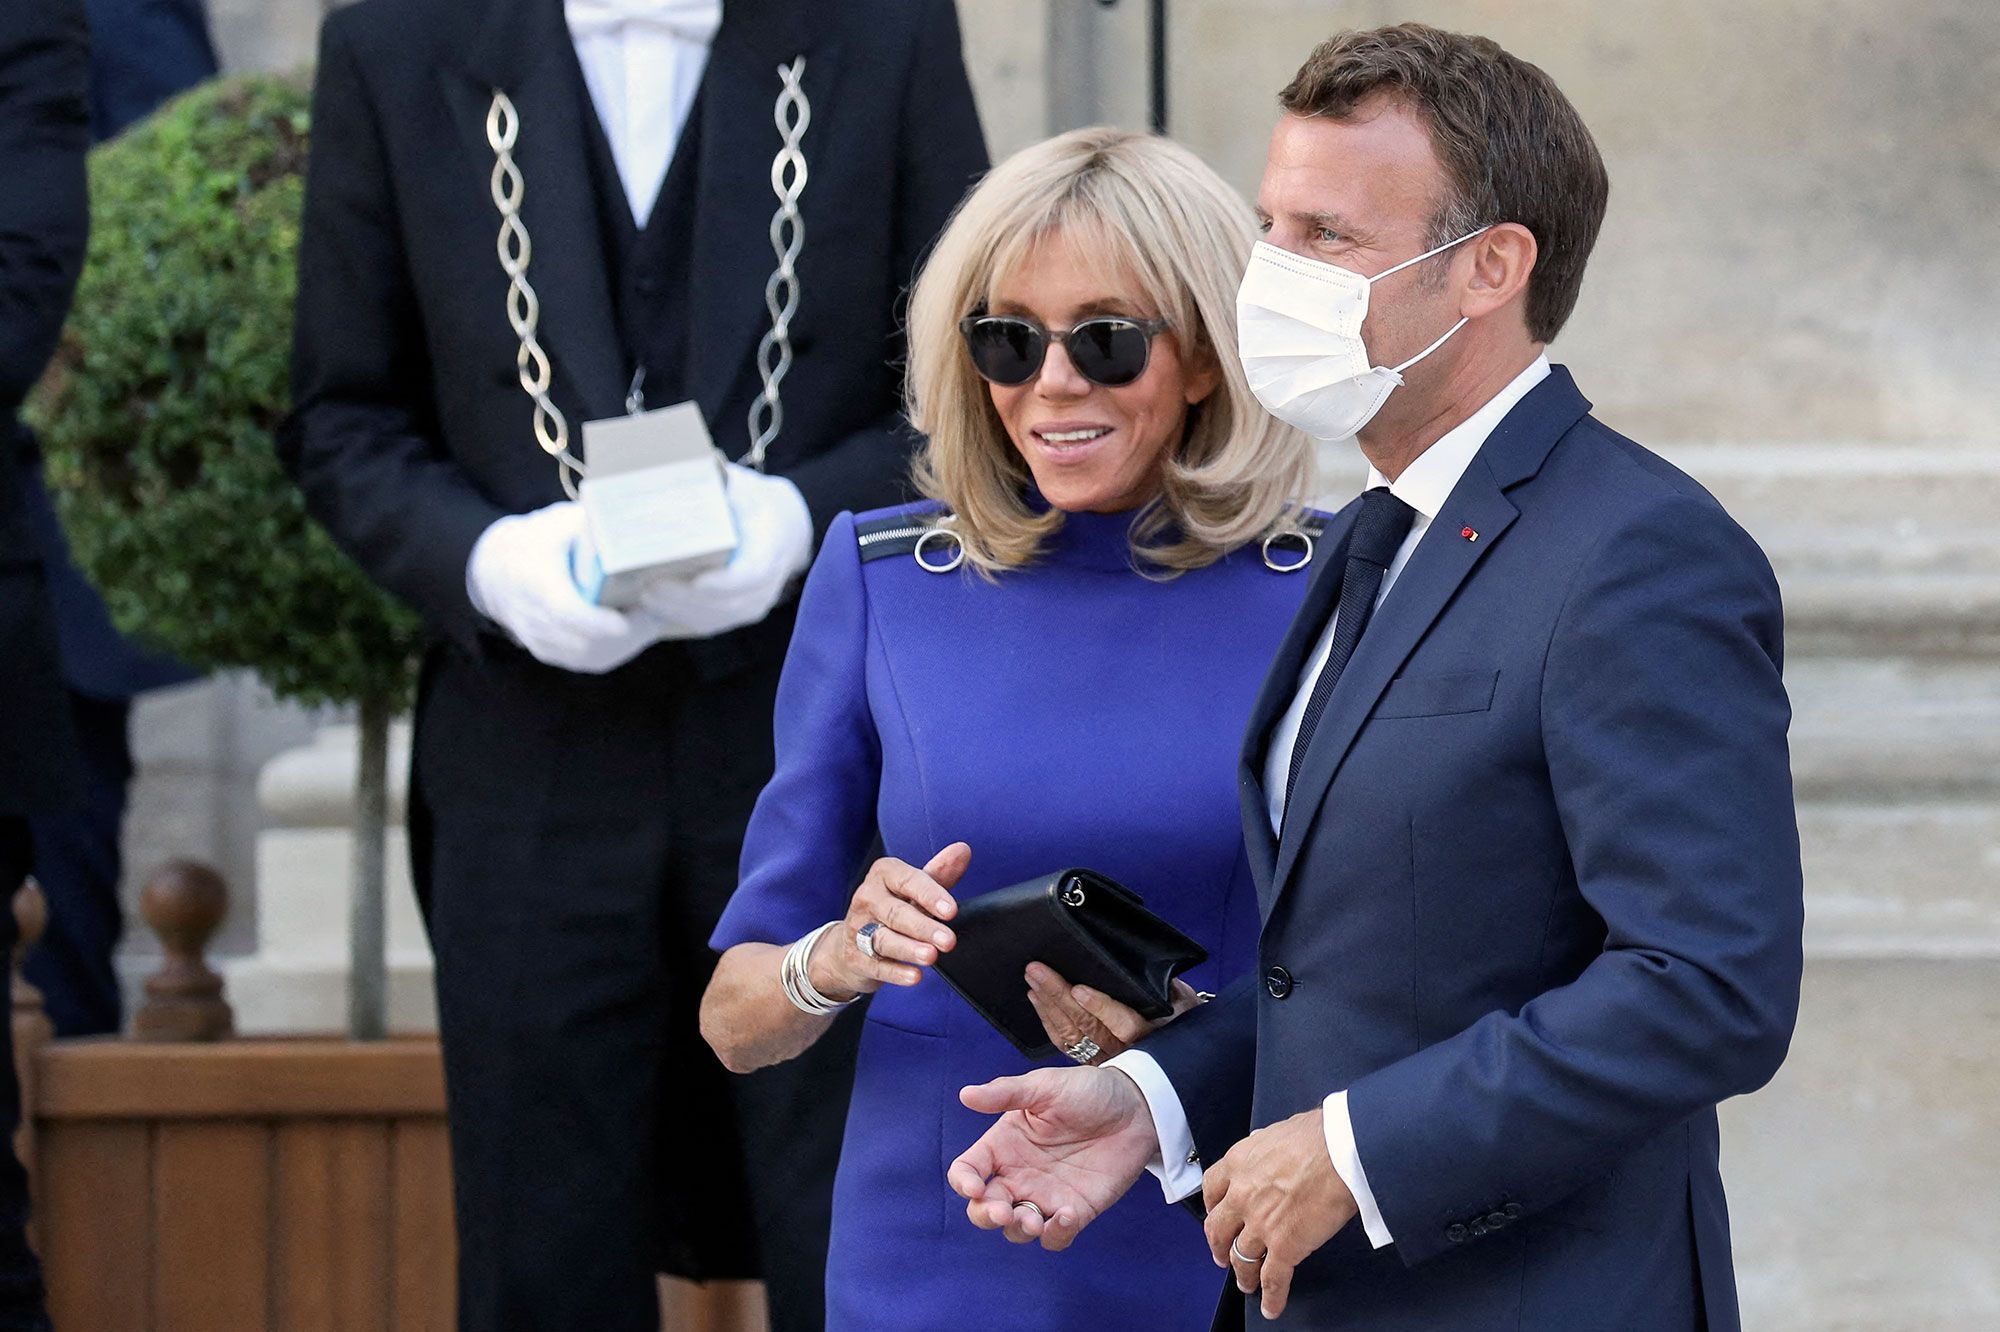 Как зовут жену макрона. Жена президента Франции Макрона 2020. Бриджит жена президента Франции. Первая леди Франции Бриджит Макрон. Бриджит Макрон жена президента Франции.